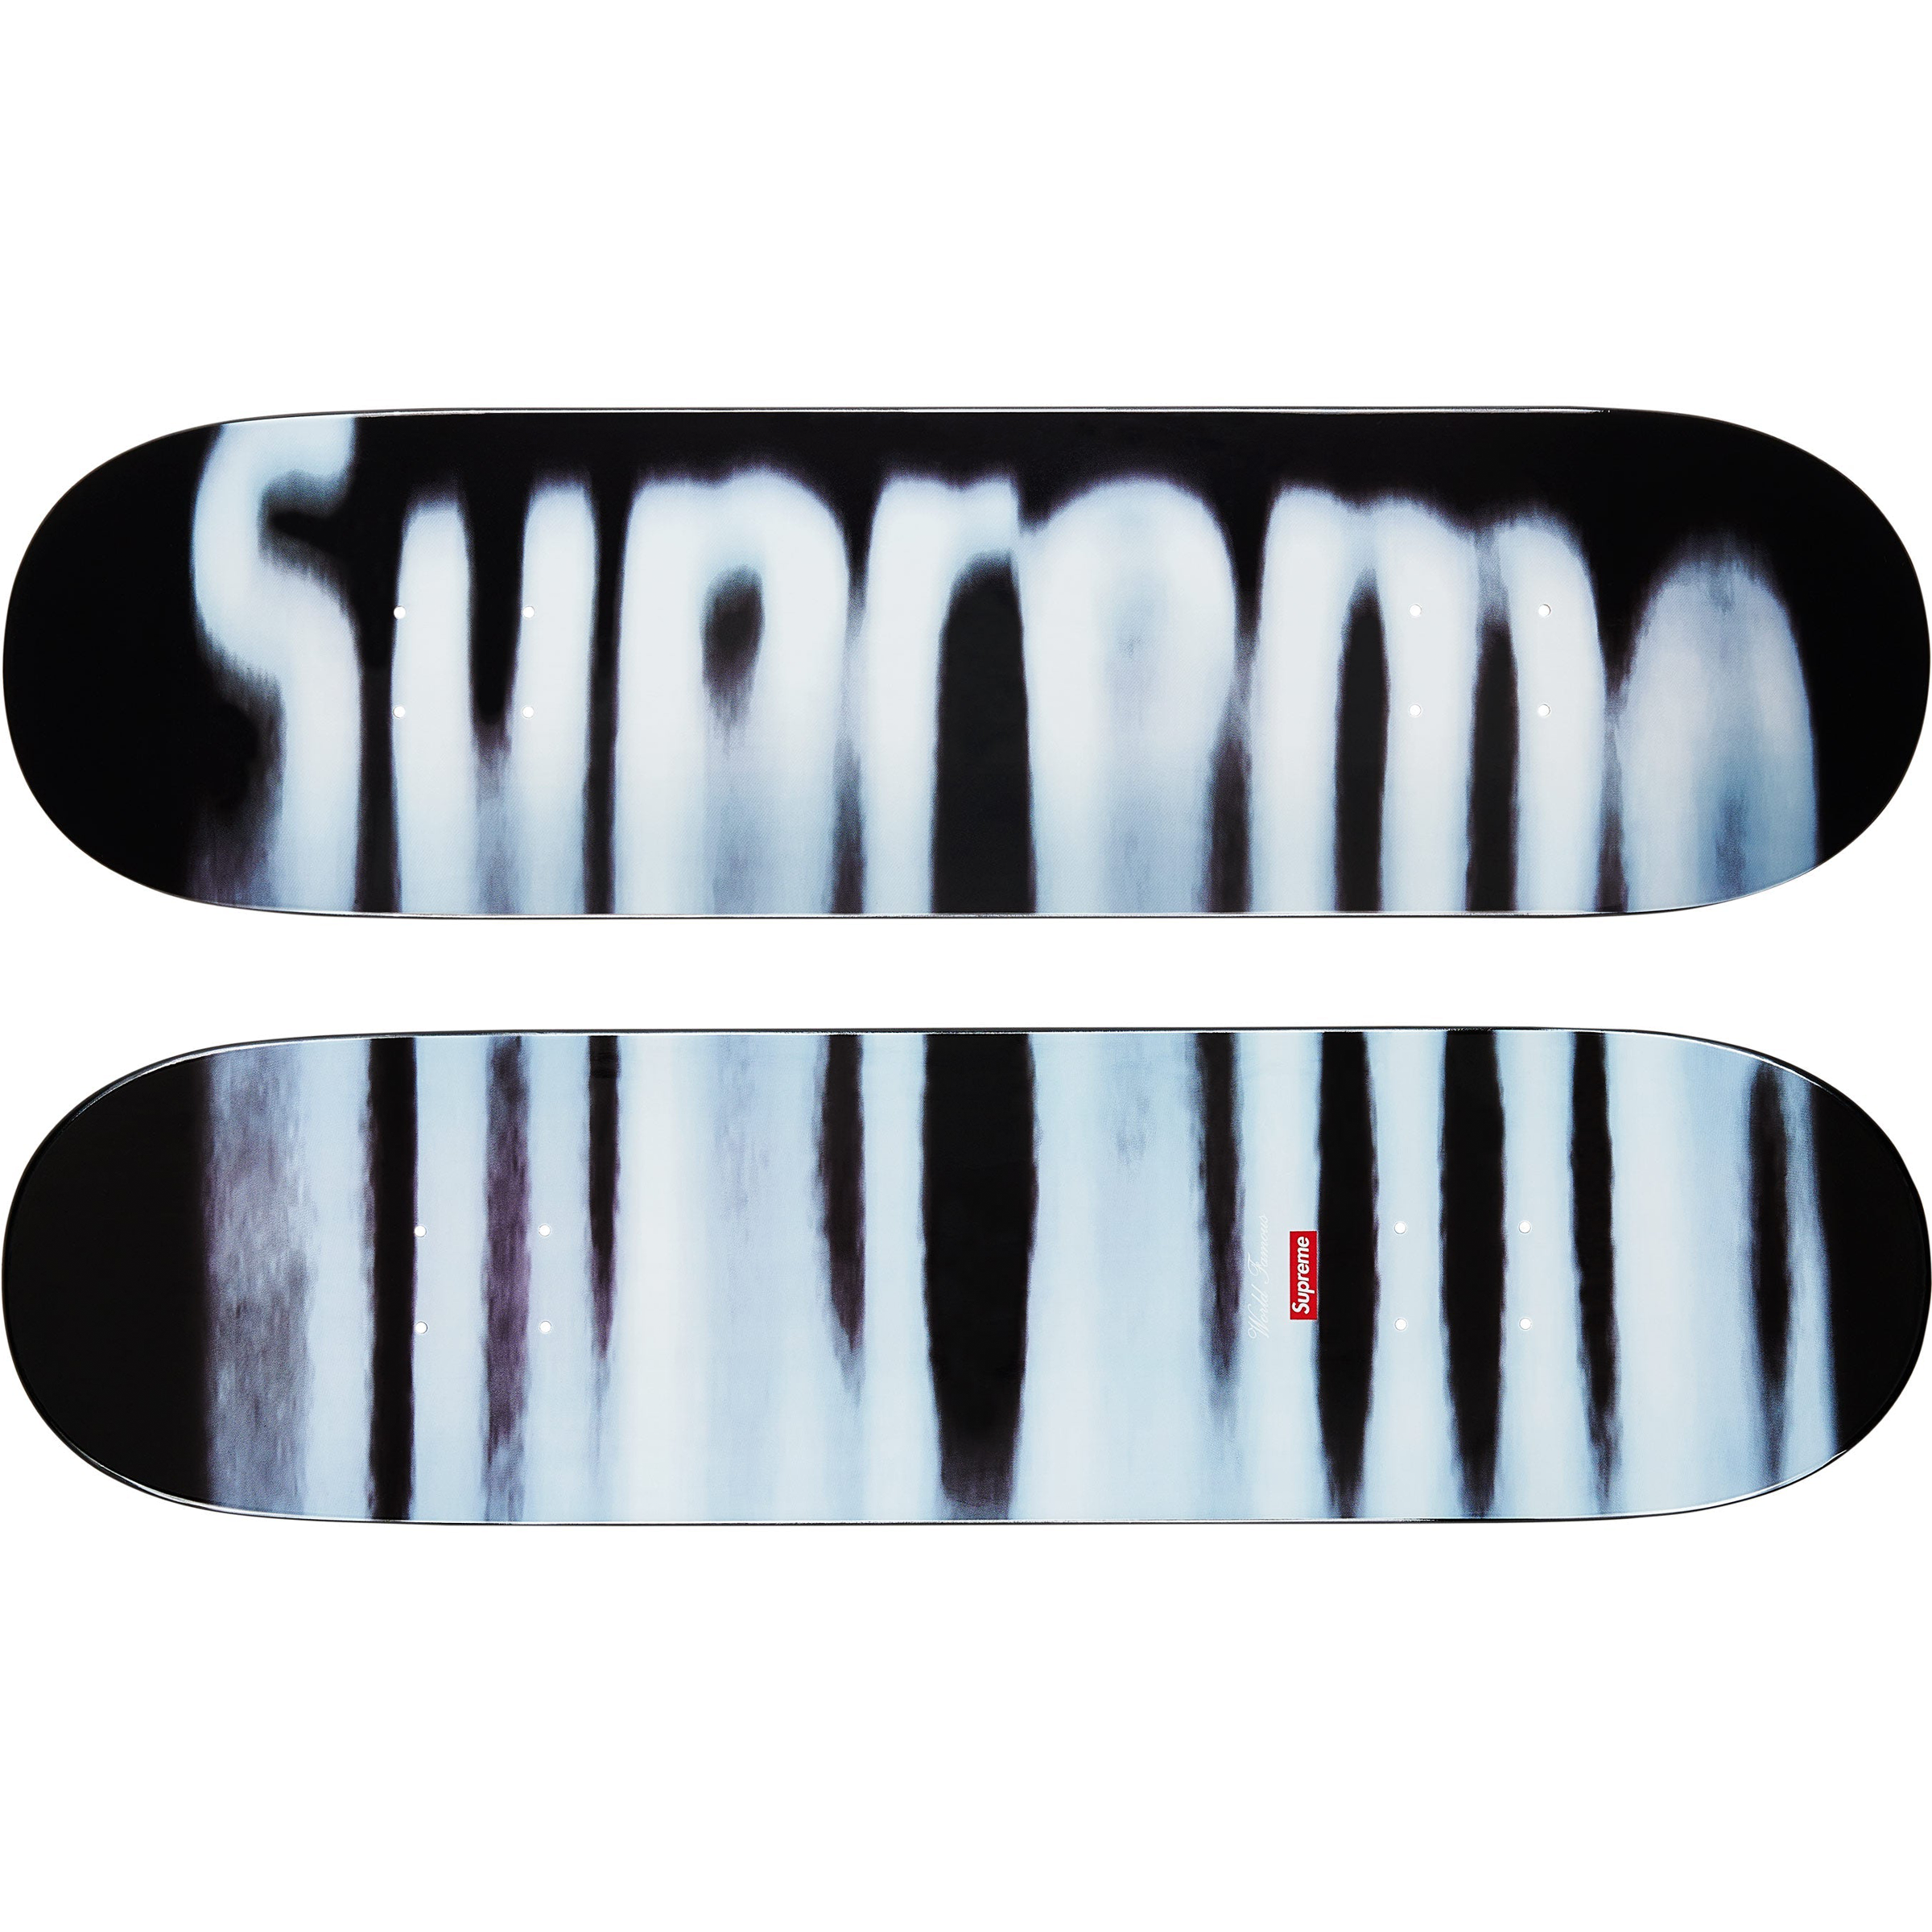 Supreme "Blurred Logo" Skateboard